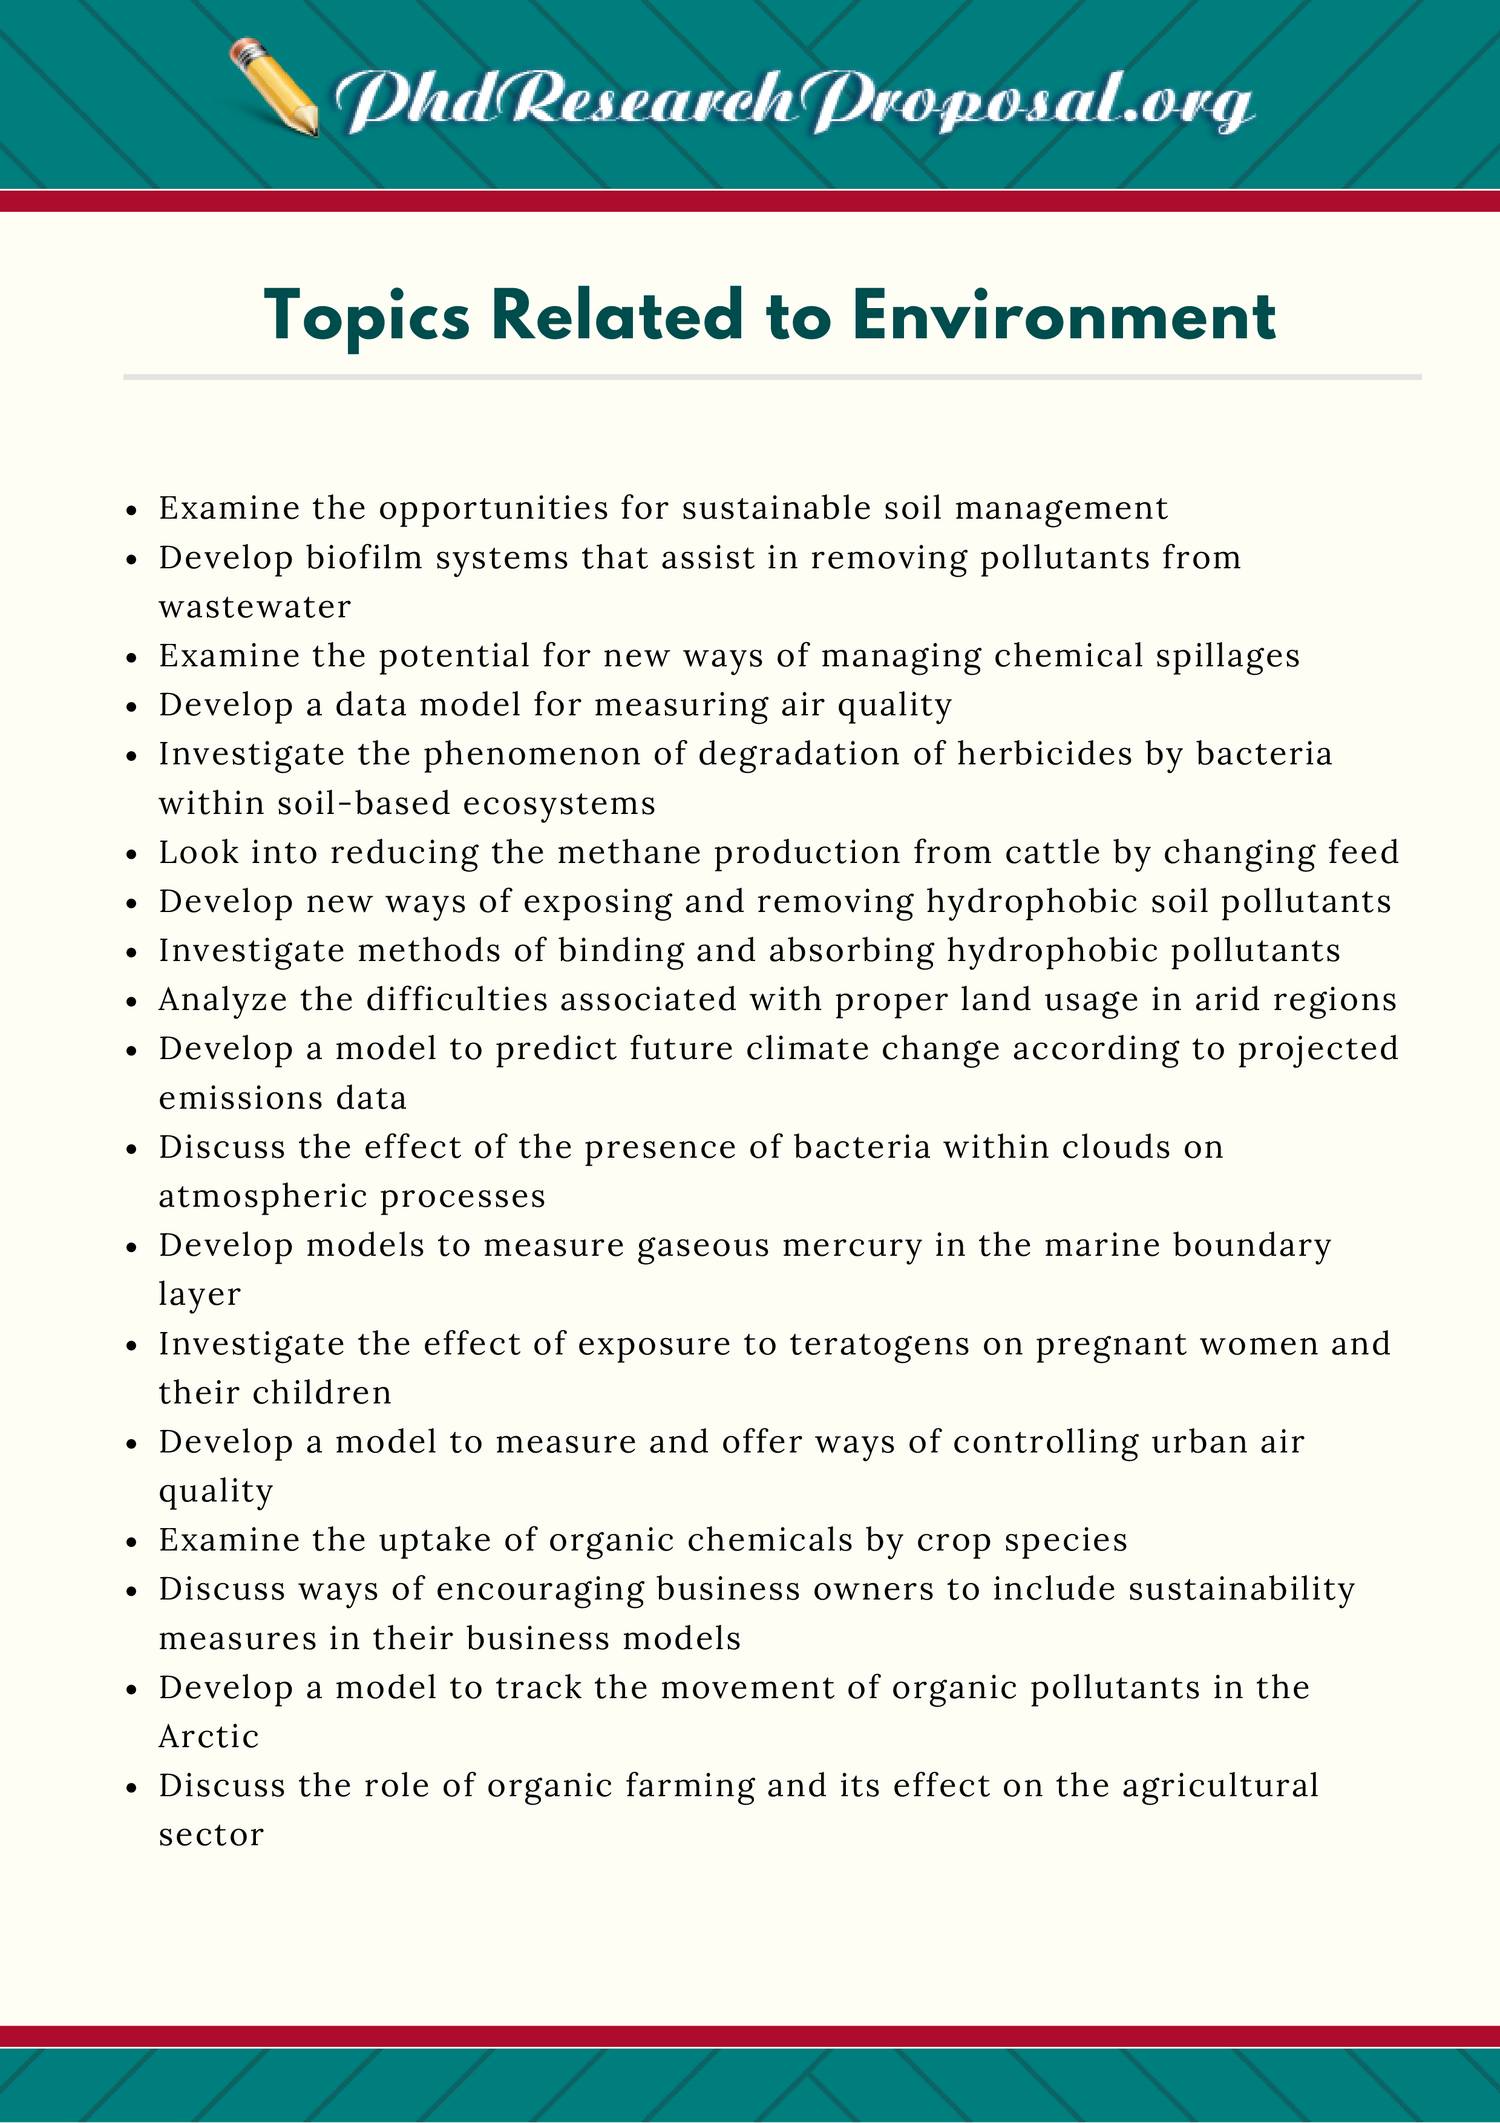 environmental studies assignment topics